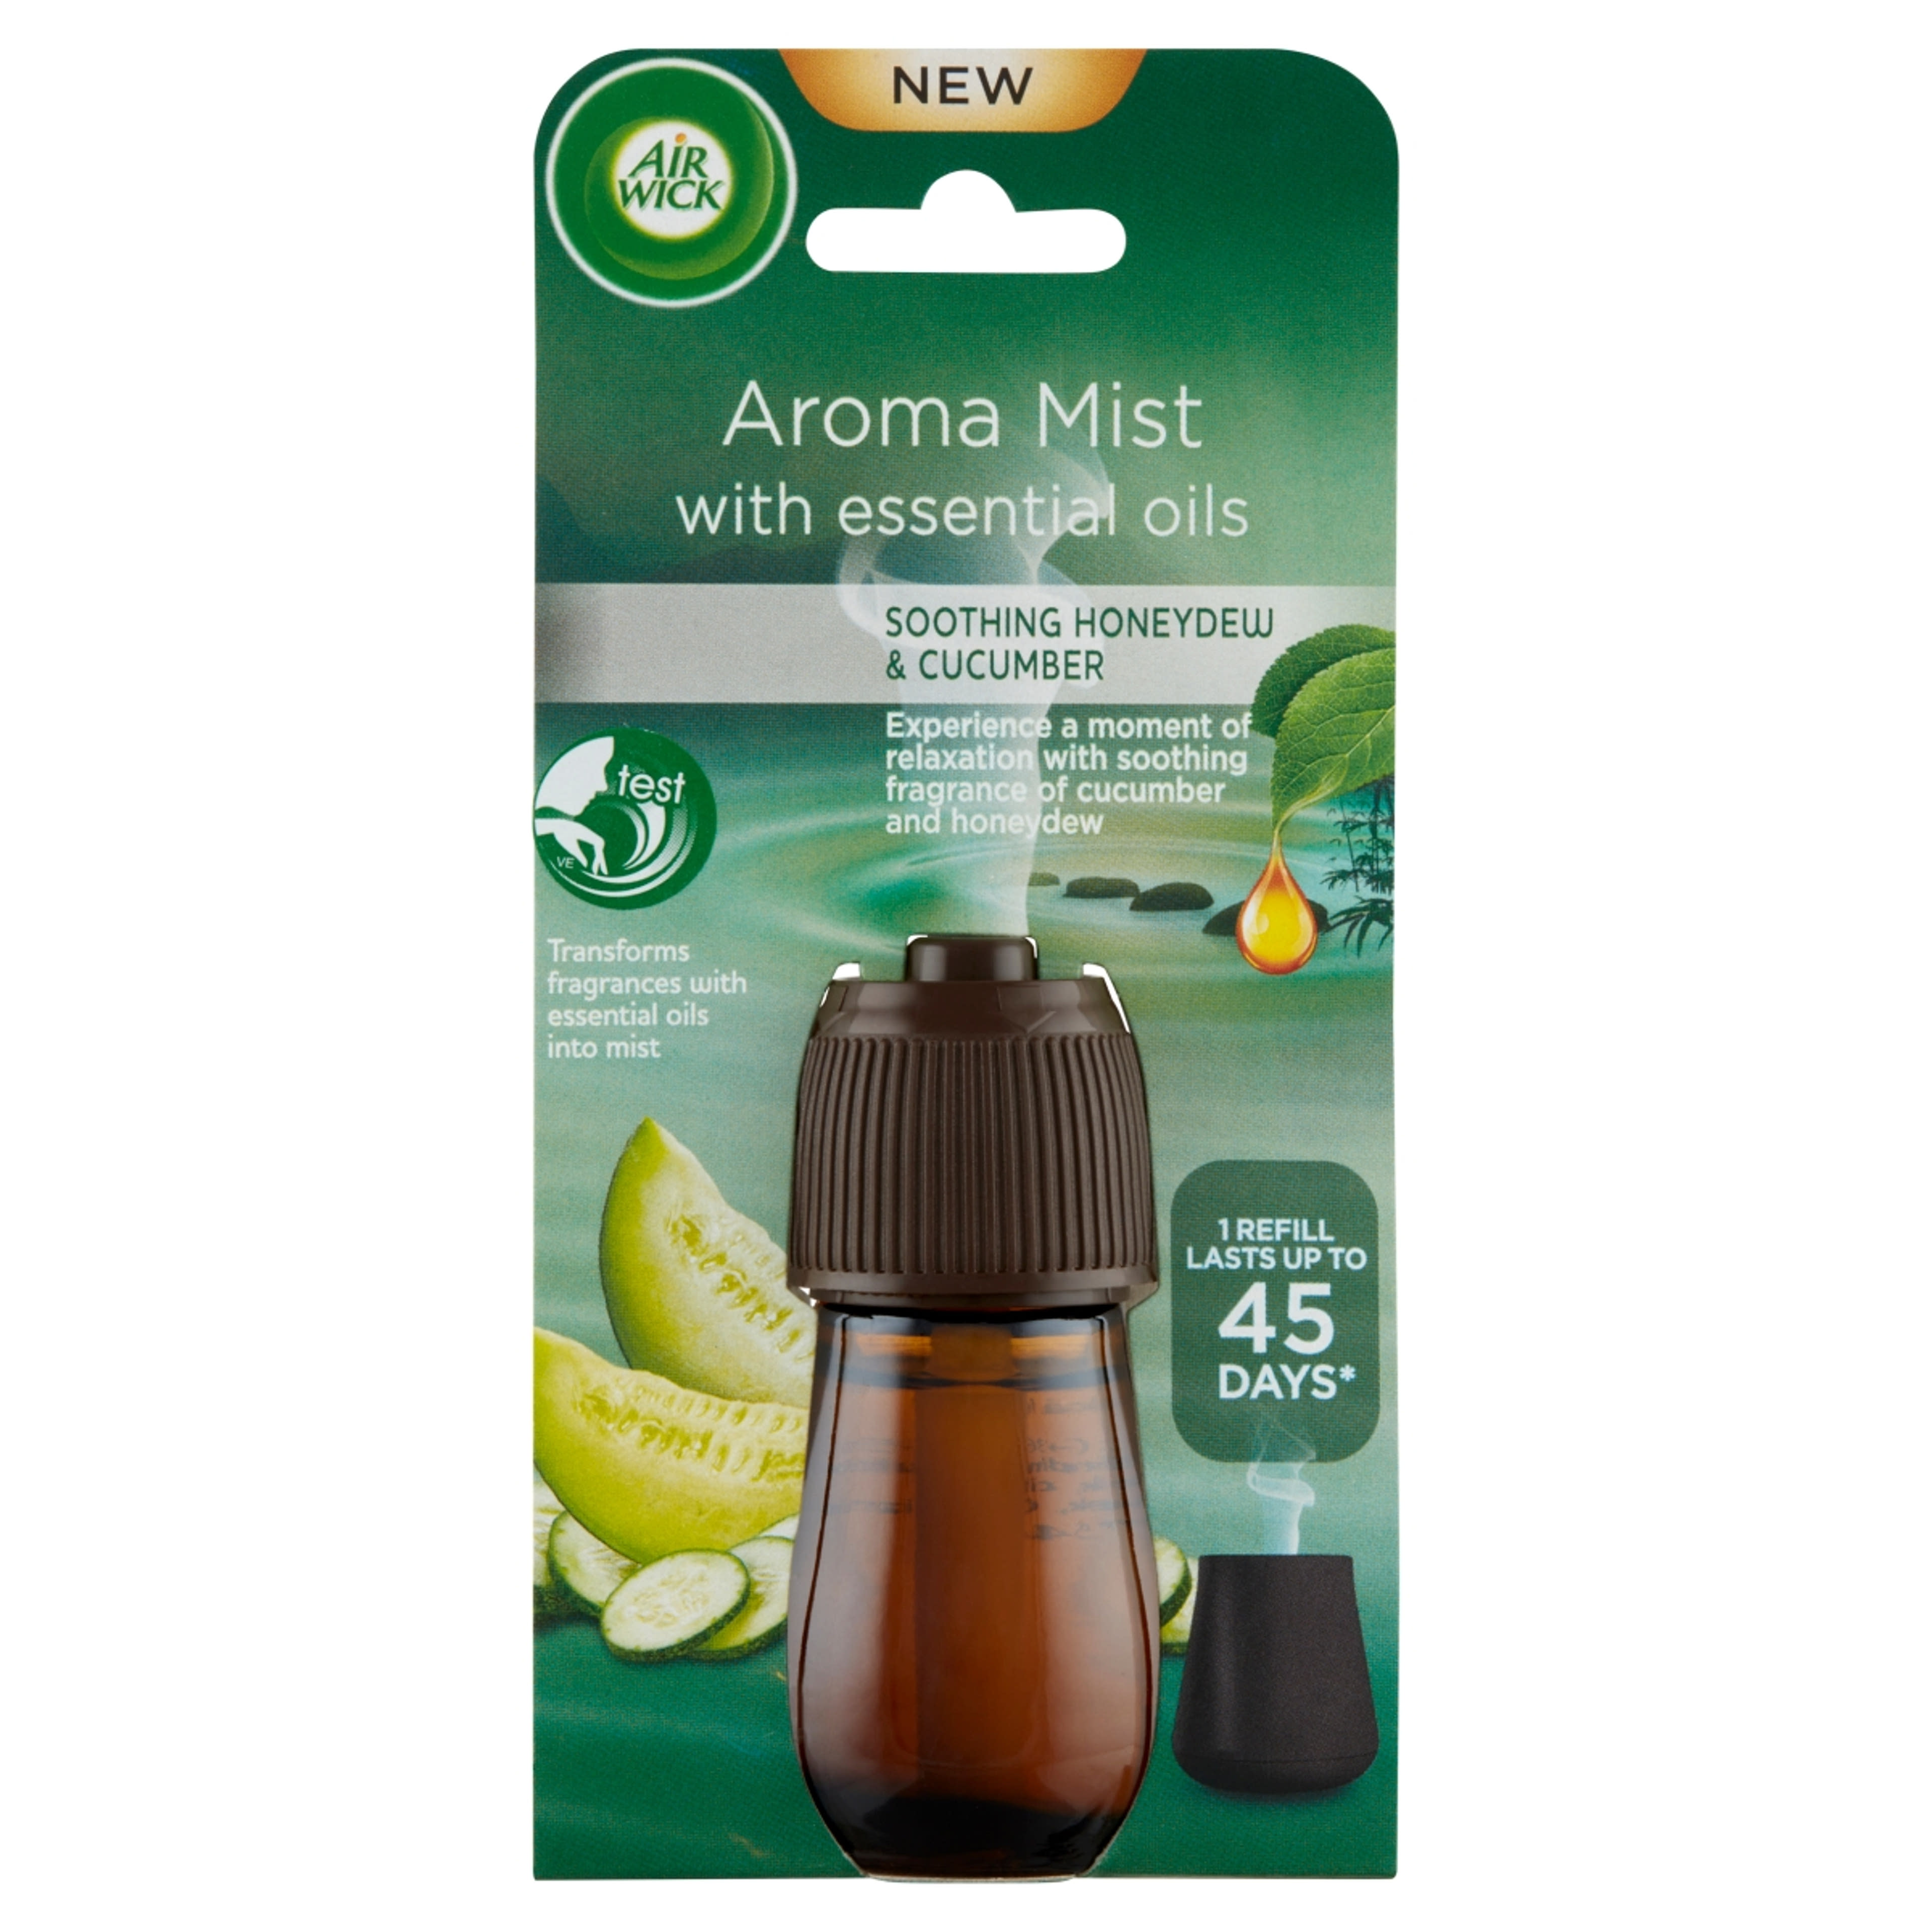 Air Wick Aroma Mist Mézdinnye és Uborka aroma diffúzor utántöltő - 20 ml-1